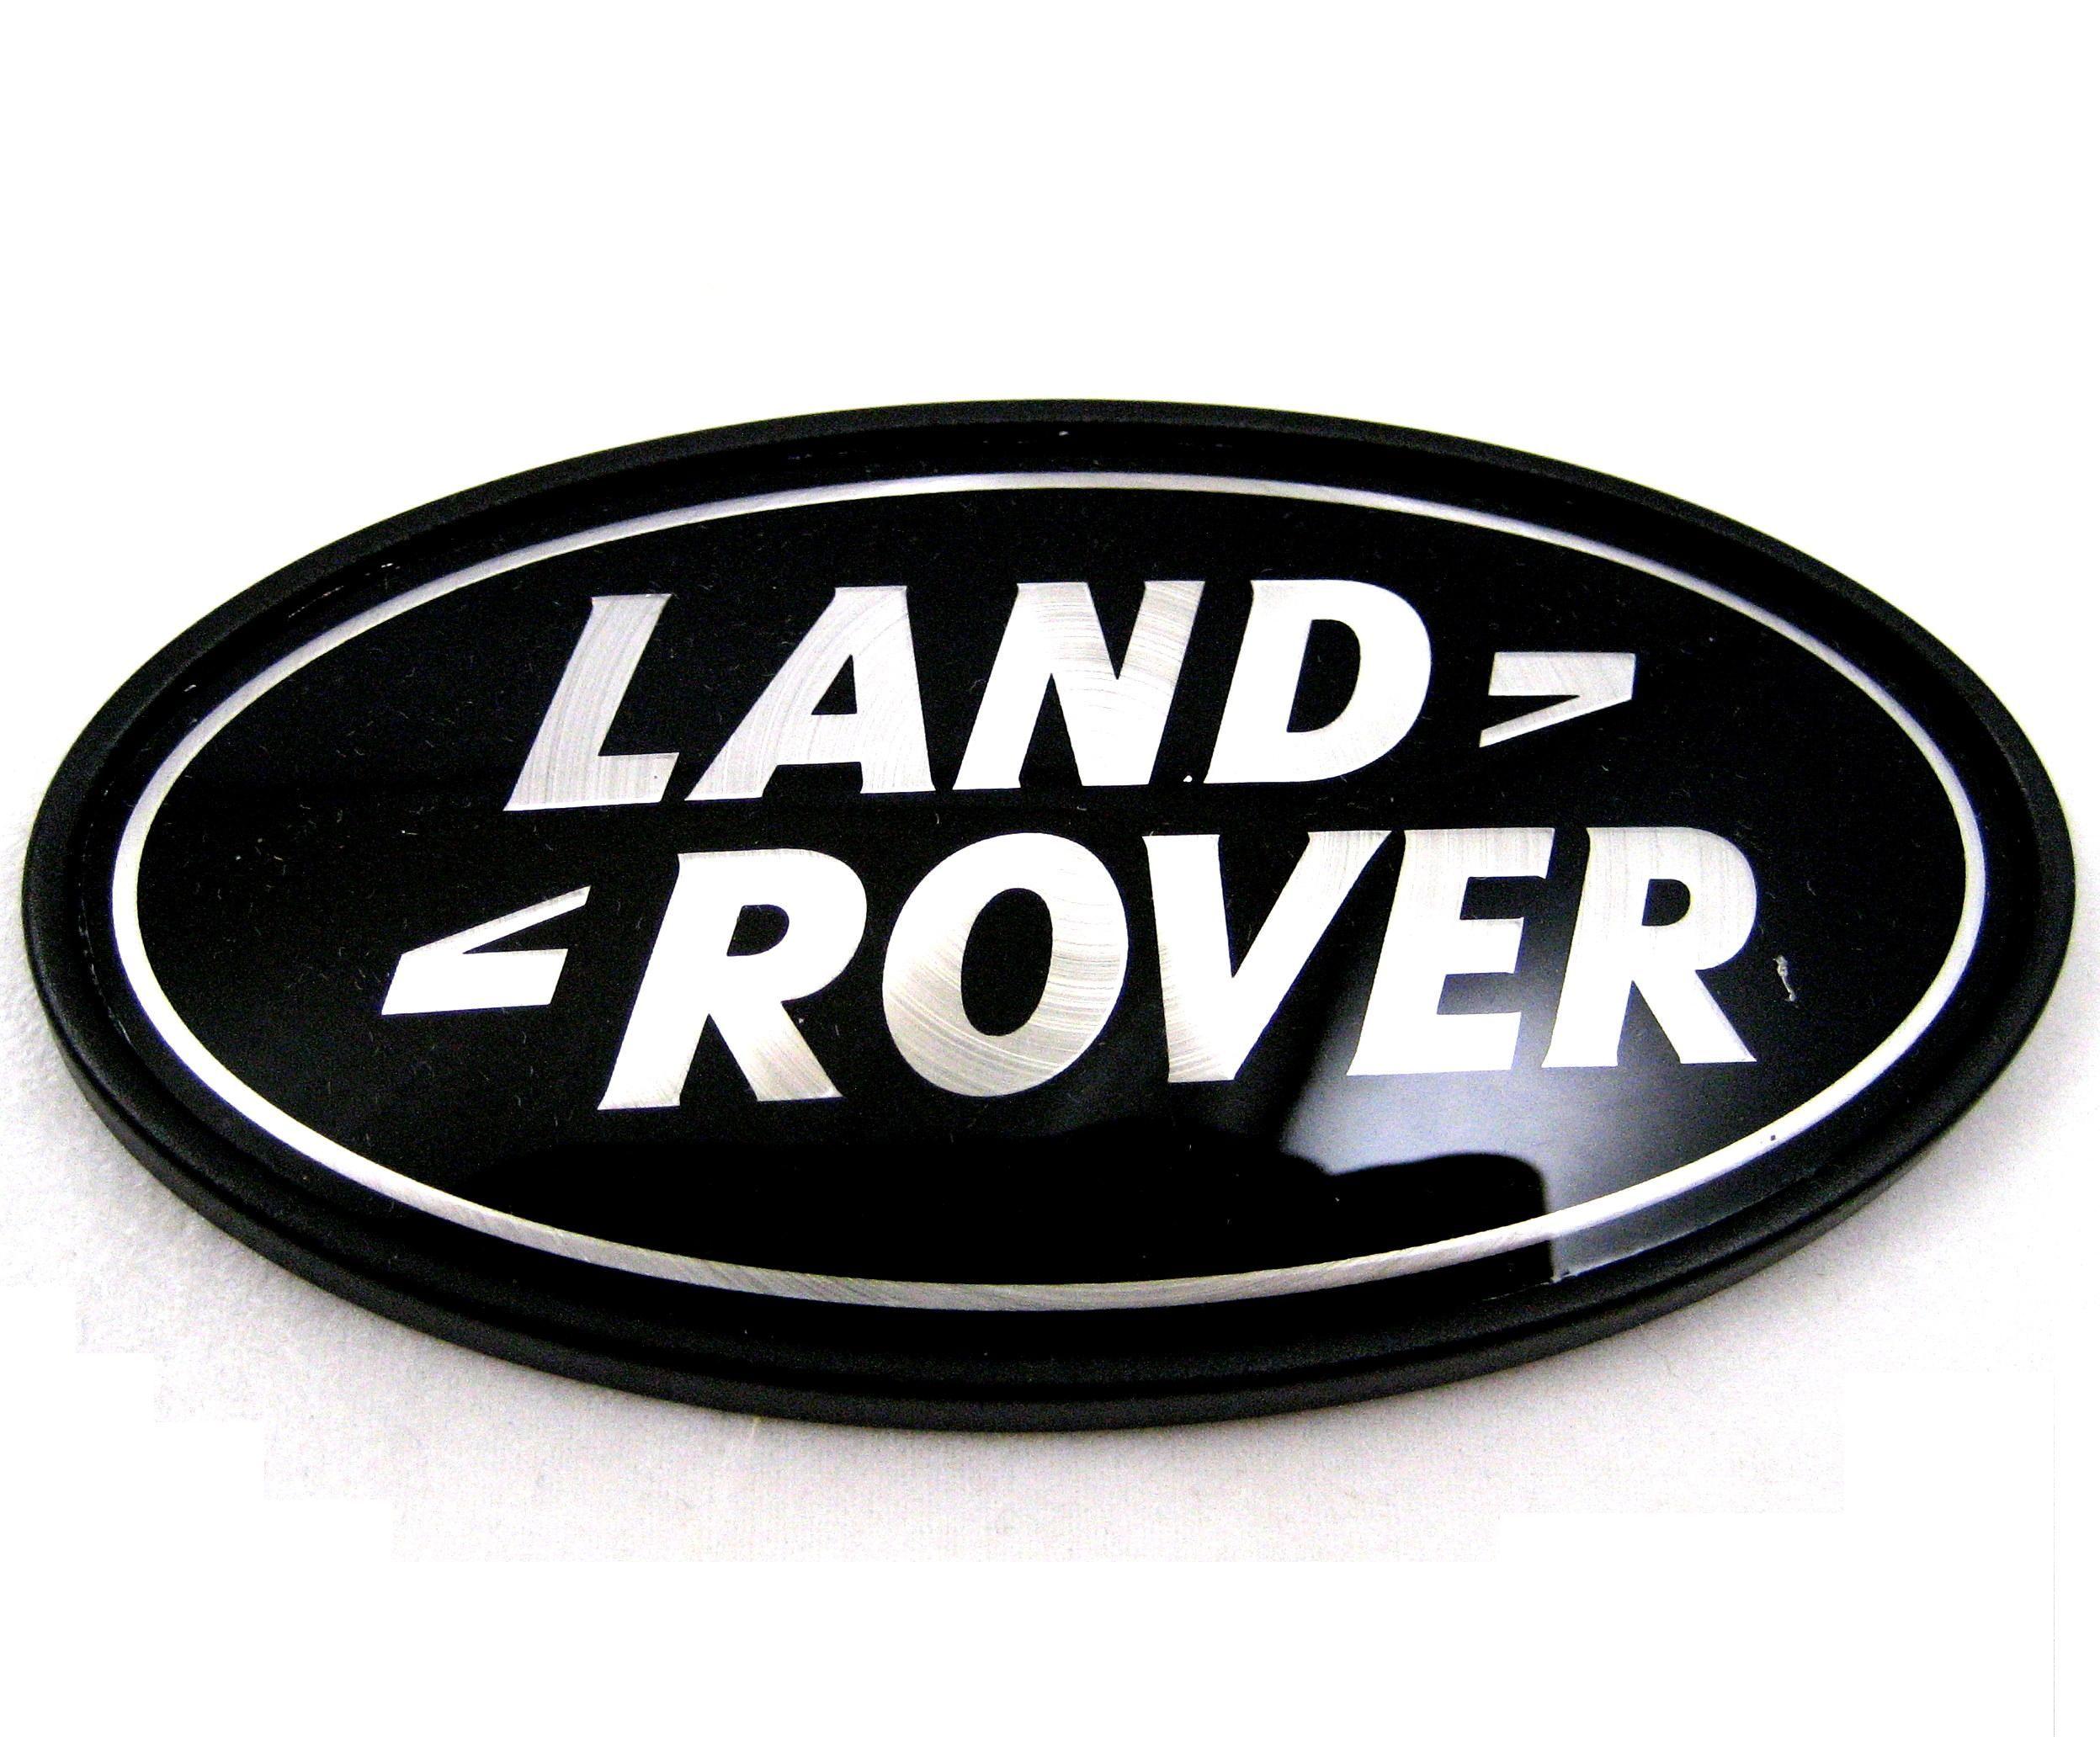 range rover logo black